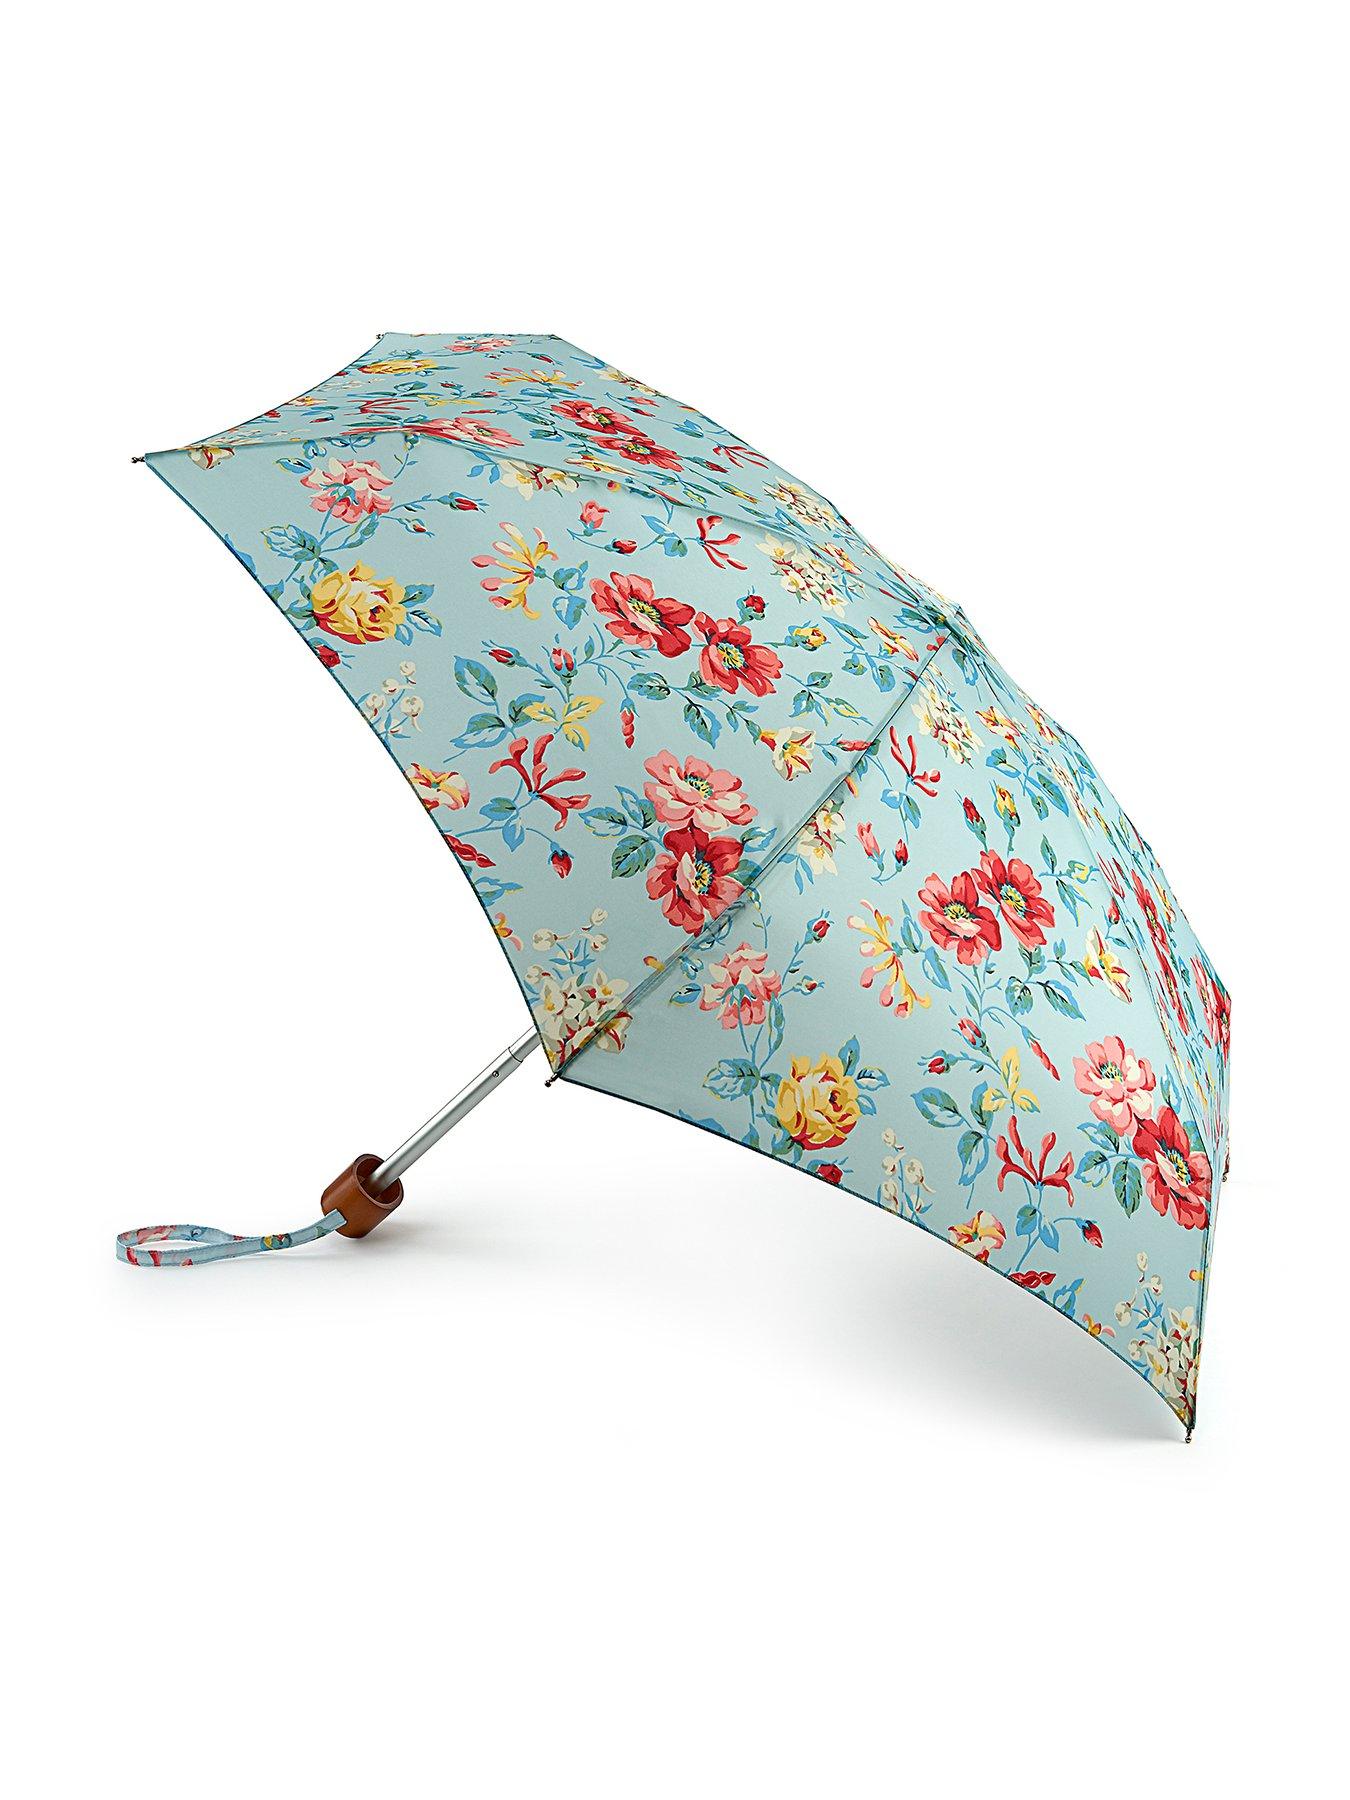 cath kidston umbrellas